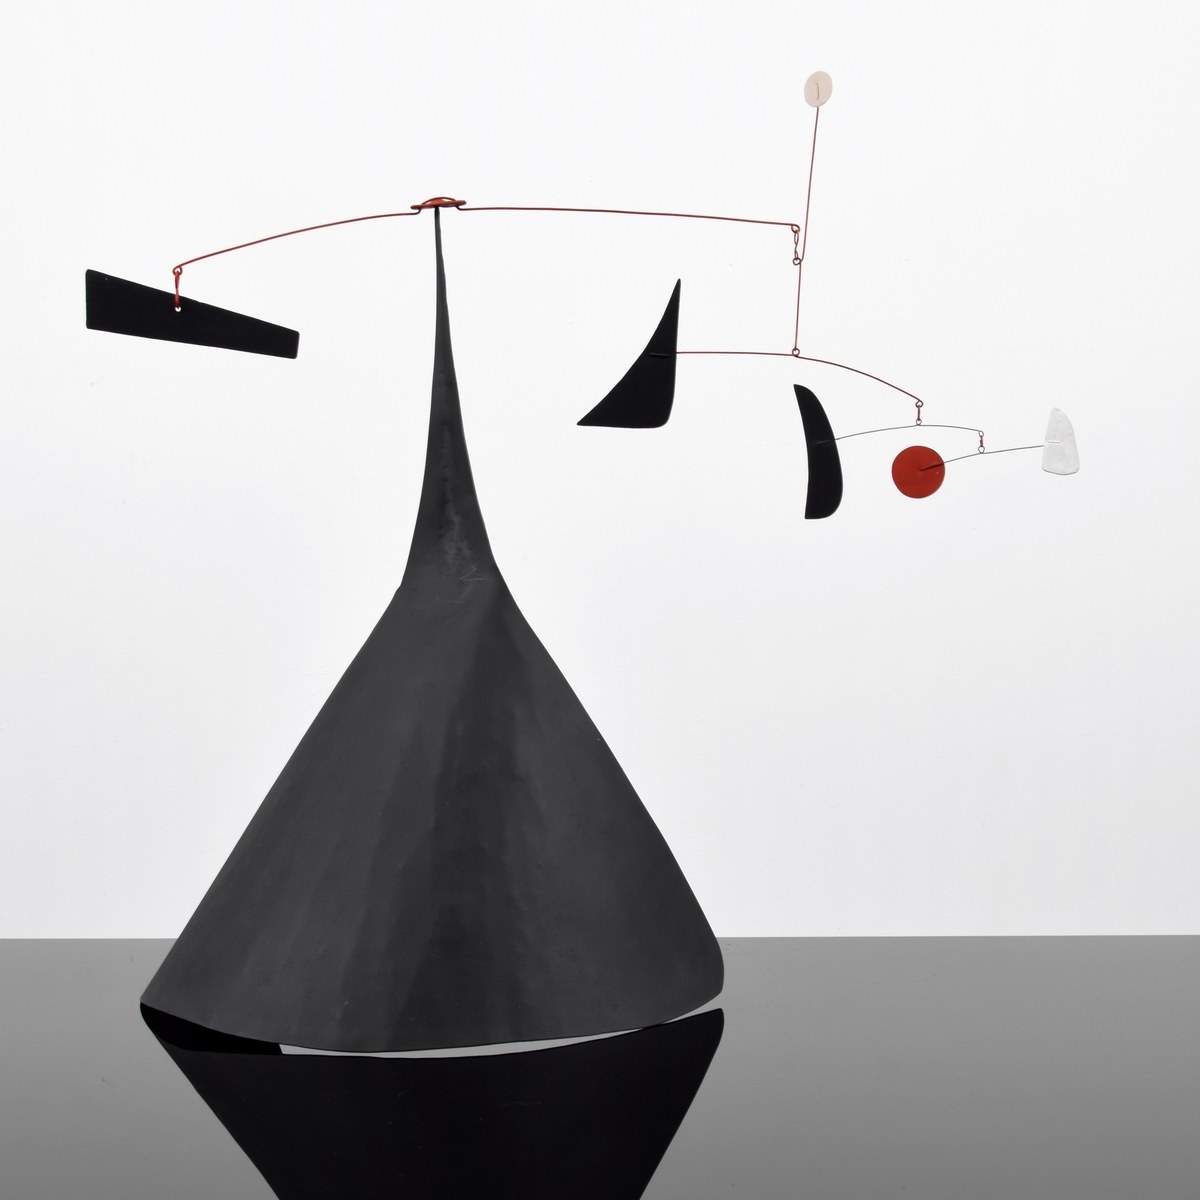 Artwork by Alexander Calder, Alexander Calder Mobile Sculpture, Made of painted sheet metal, wire